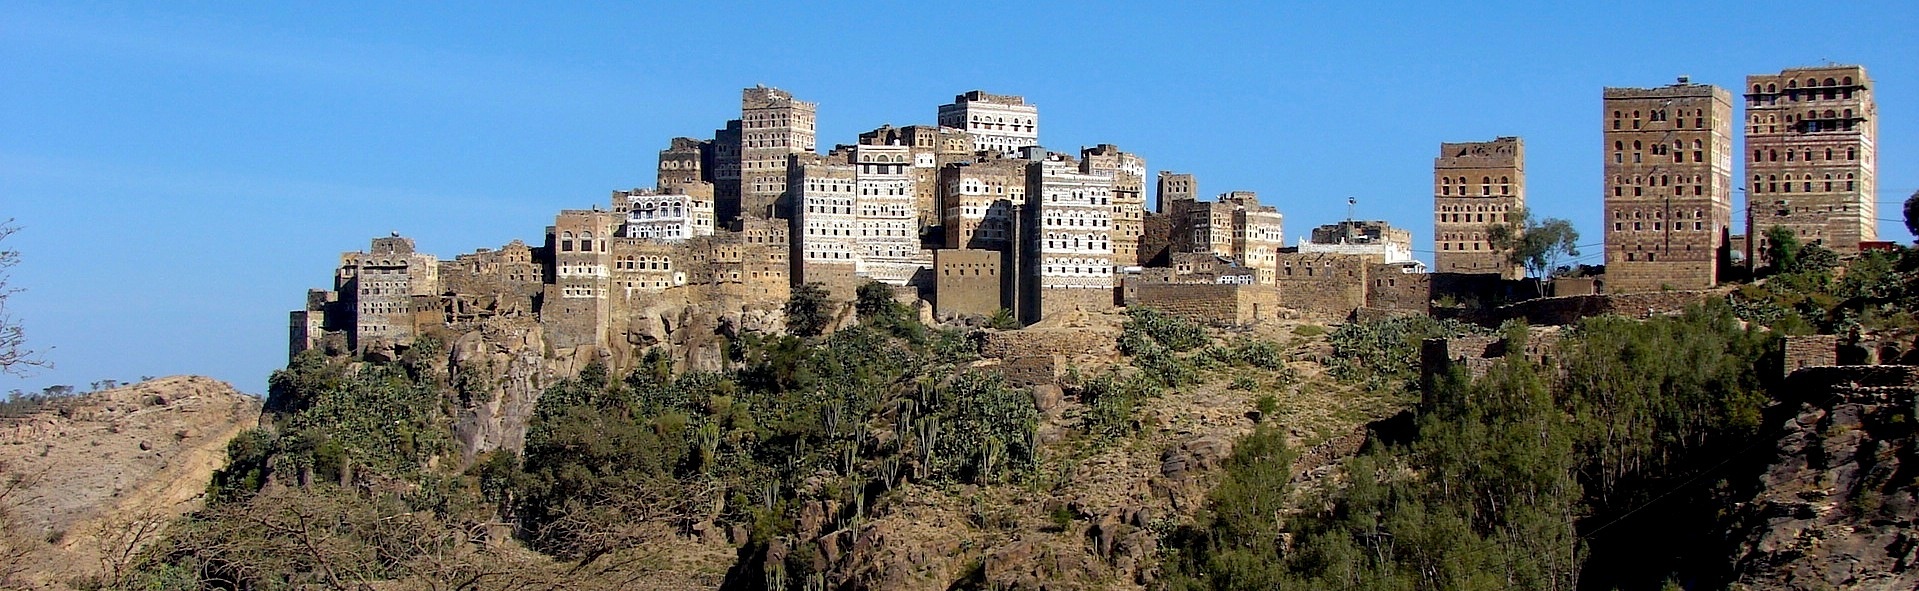 World Bank suspends operations in Yemen